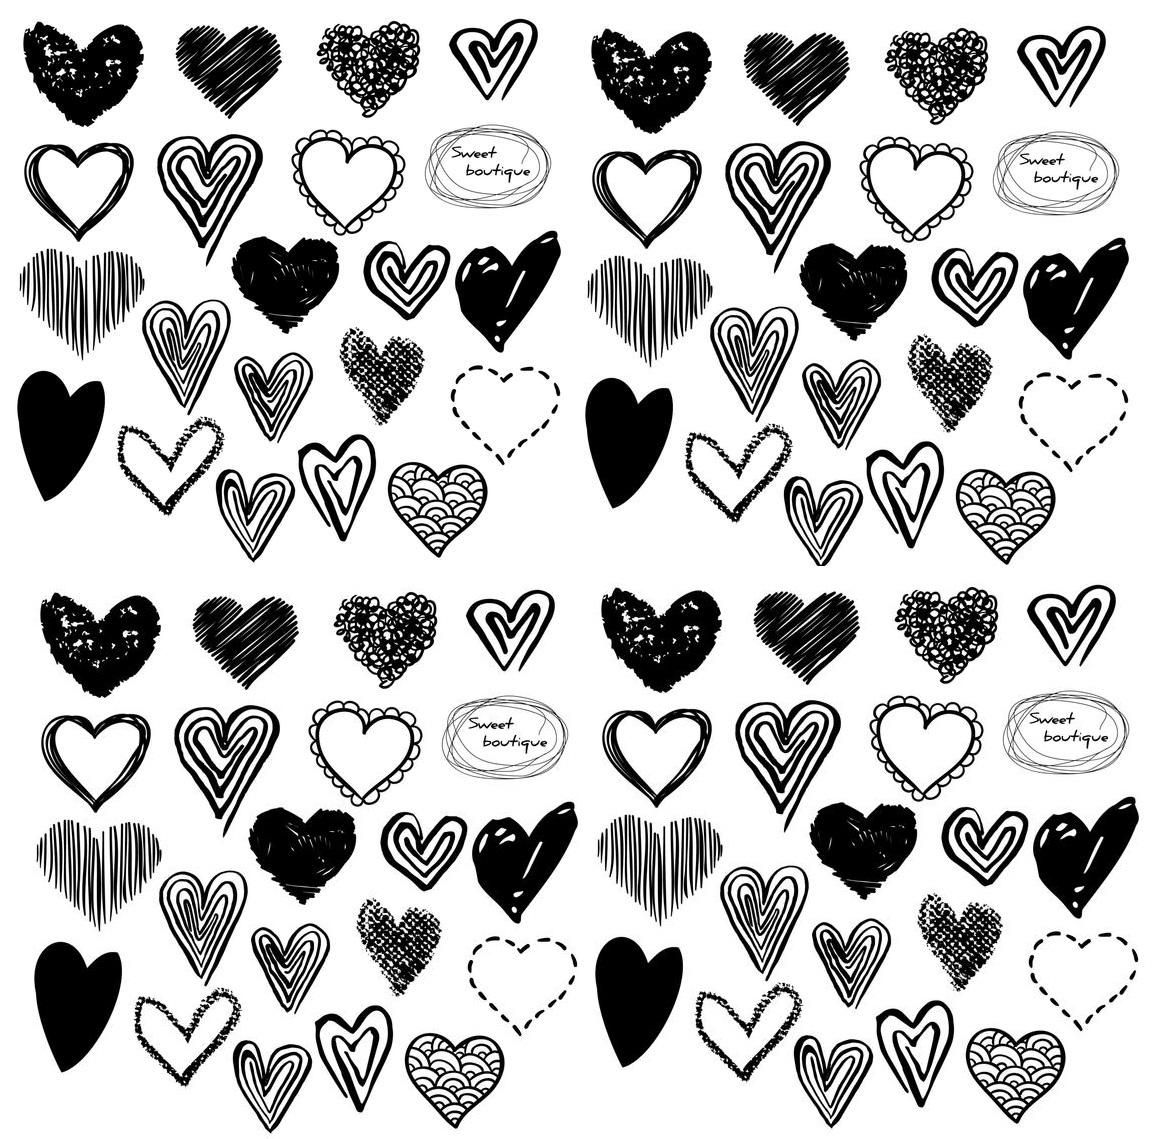 small hearts cliparts black and white